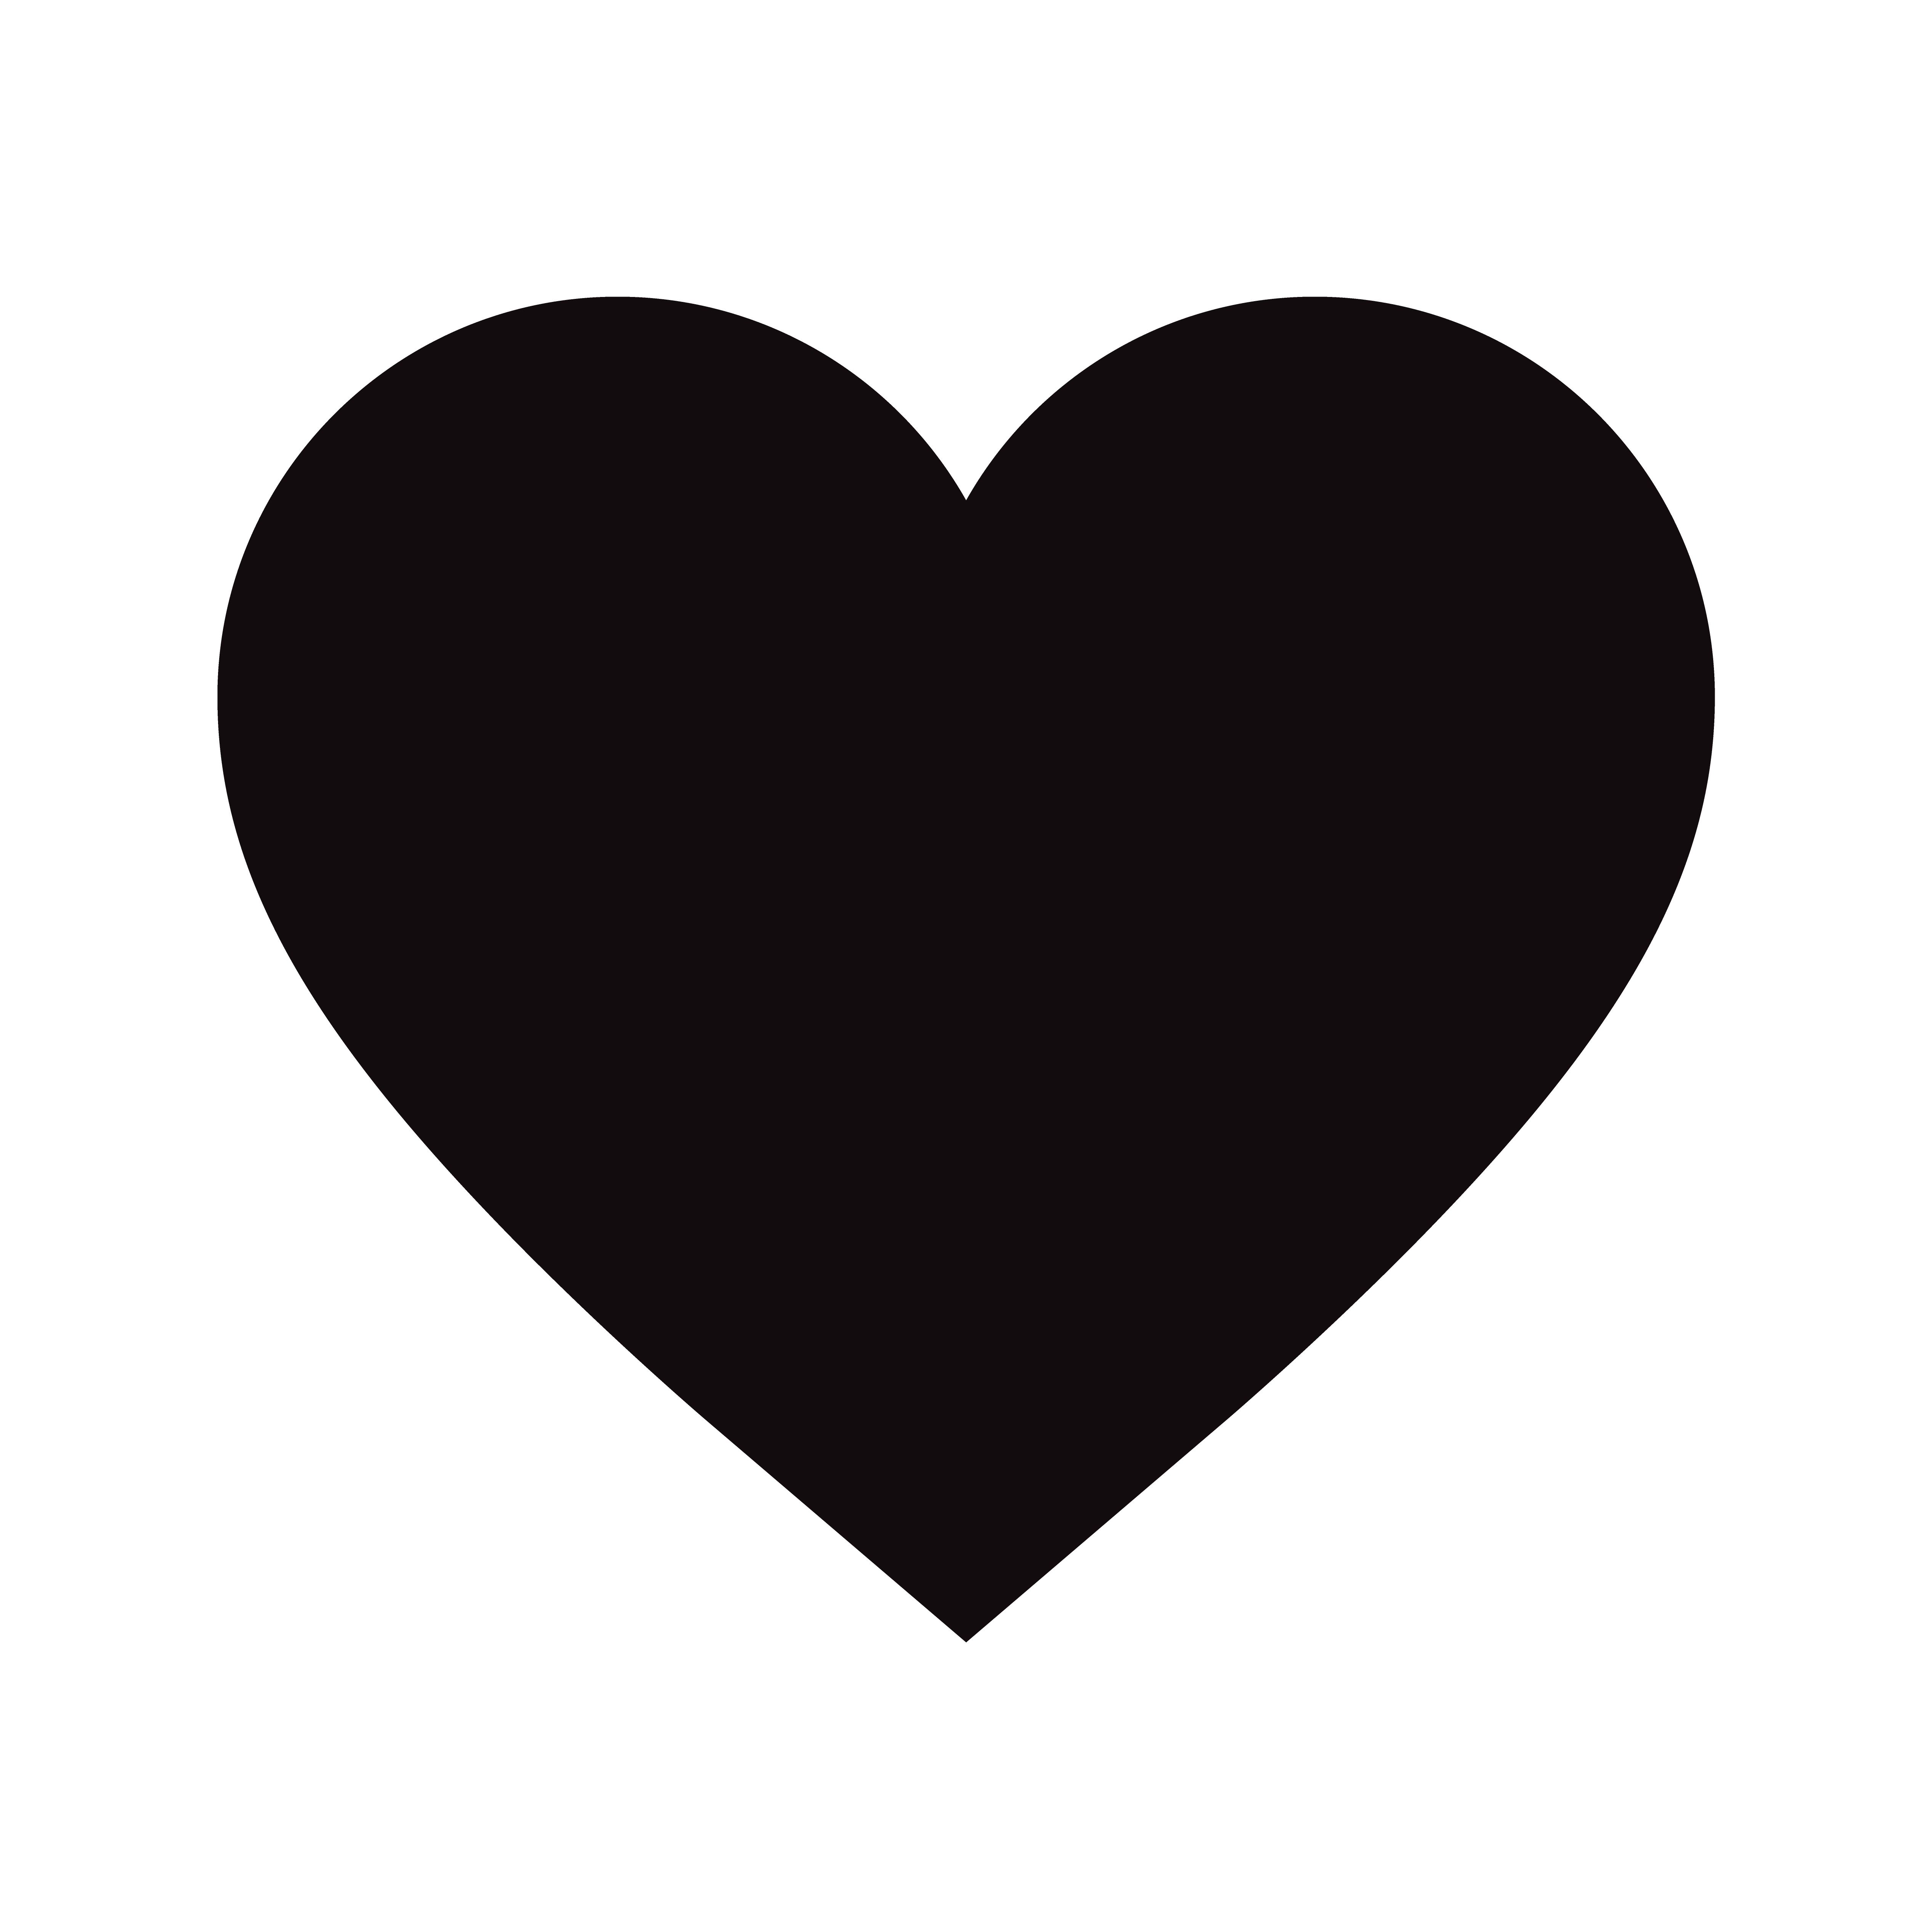 Flat Black Heart Icon Isolated on White Background. Vector illustration